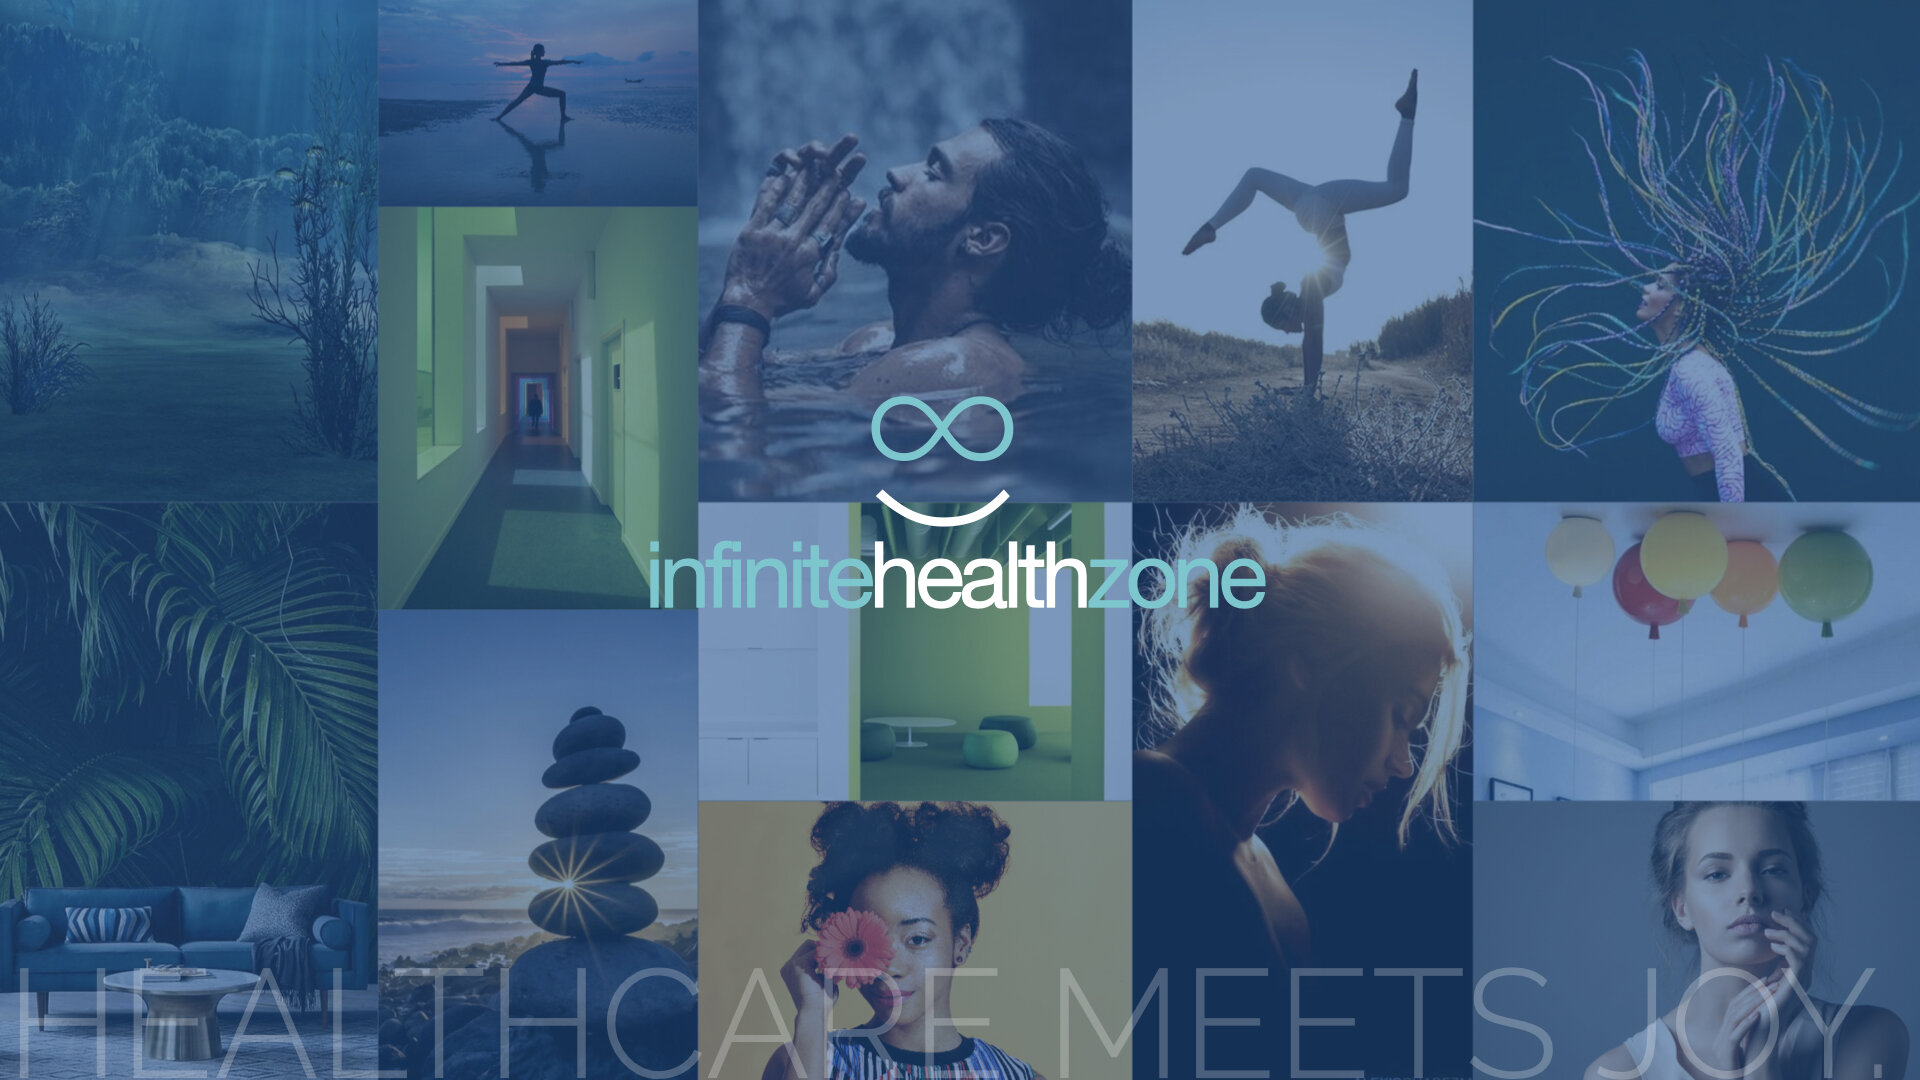 infinite health zone brand 2.021.jpeg